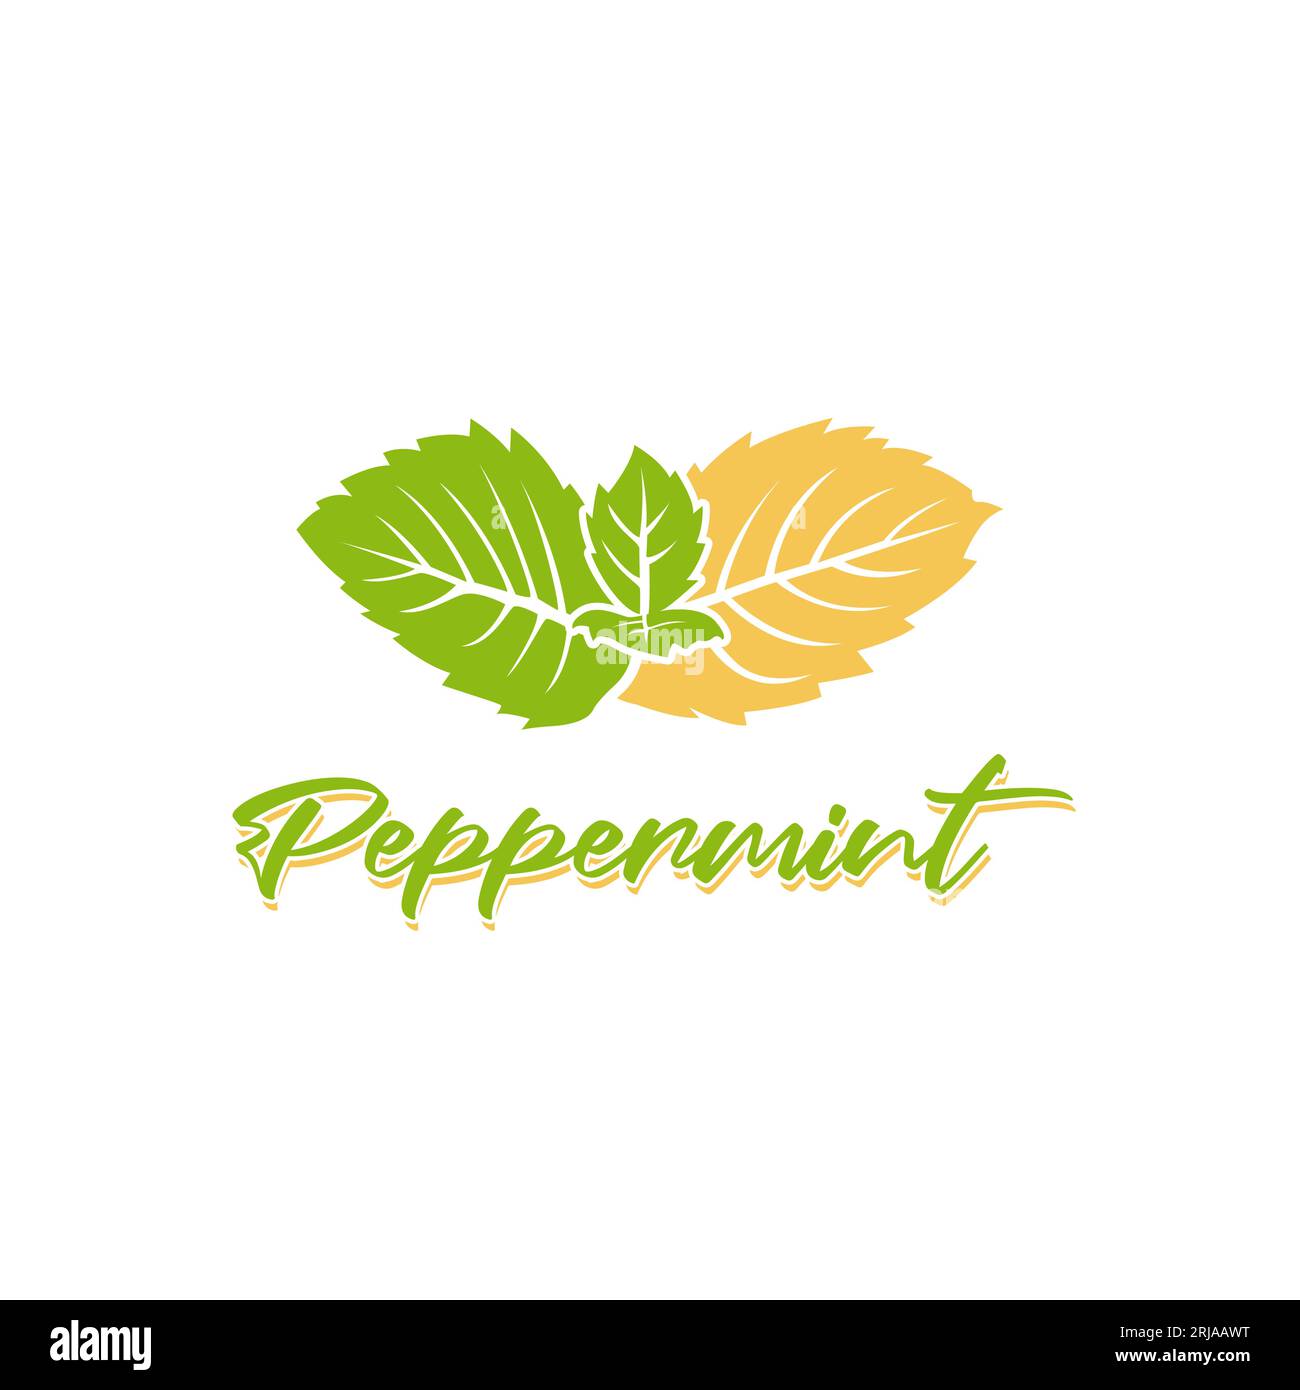 Peppermint Mint leaves logo design inspiration Stock Vector